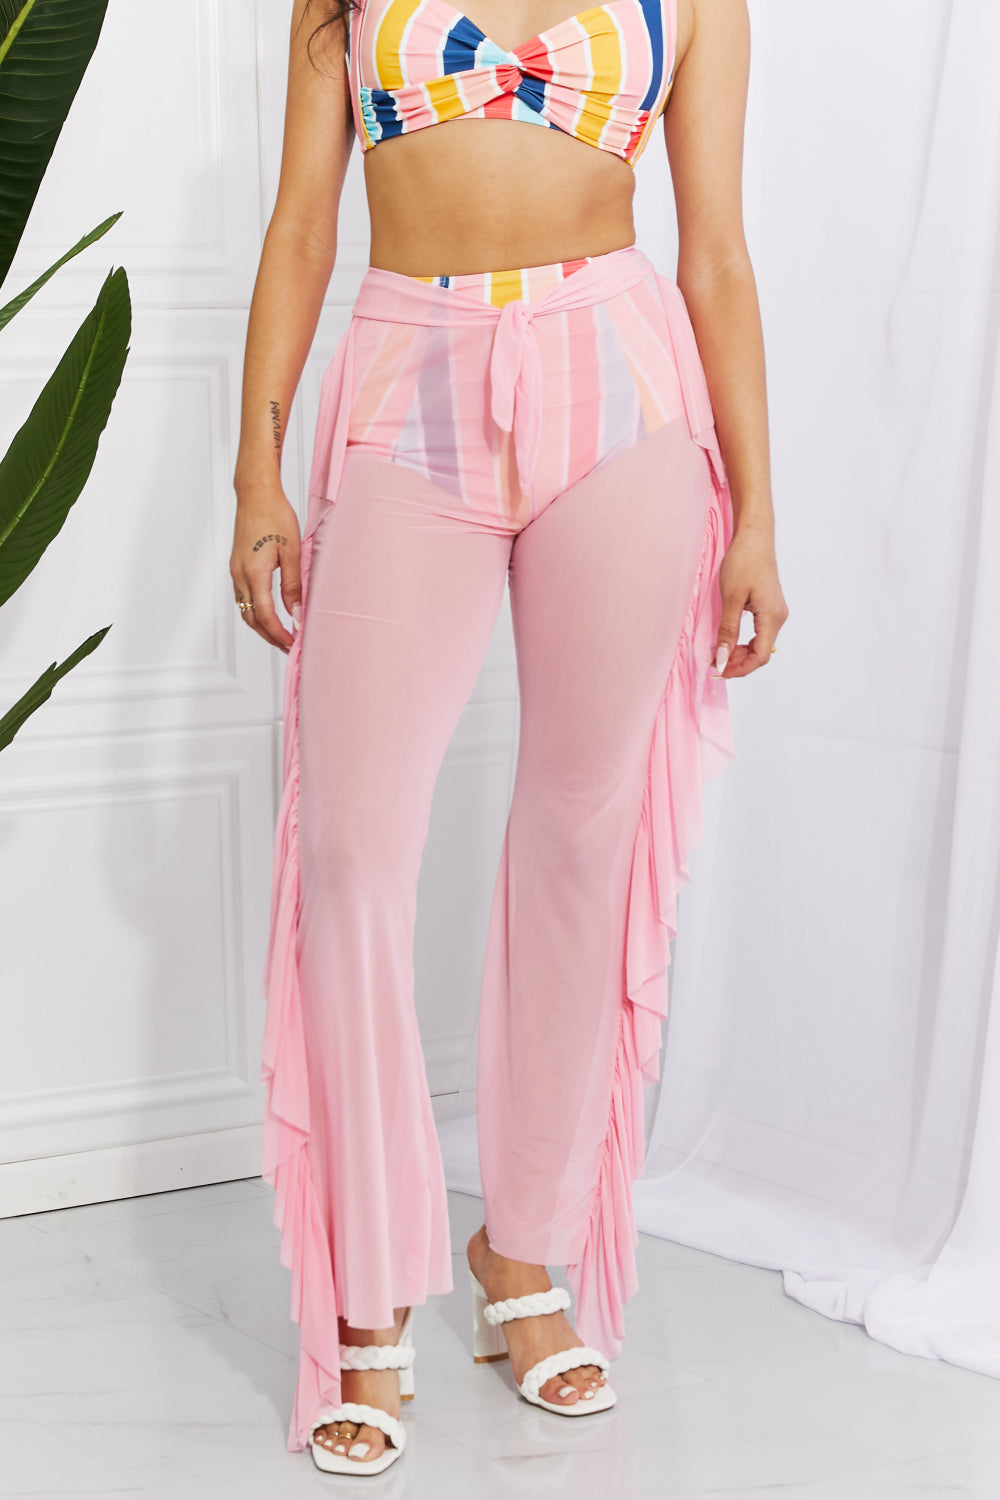 Marina West Swim Take Me To The Beach Mesh Ruffle Cover-Up Pants  Sunset and Swim Blush Pink One Size 